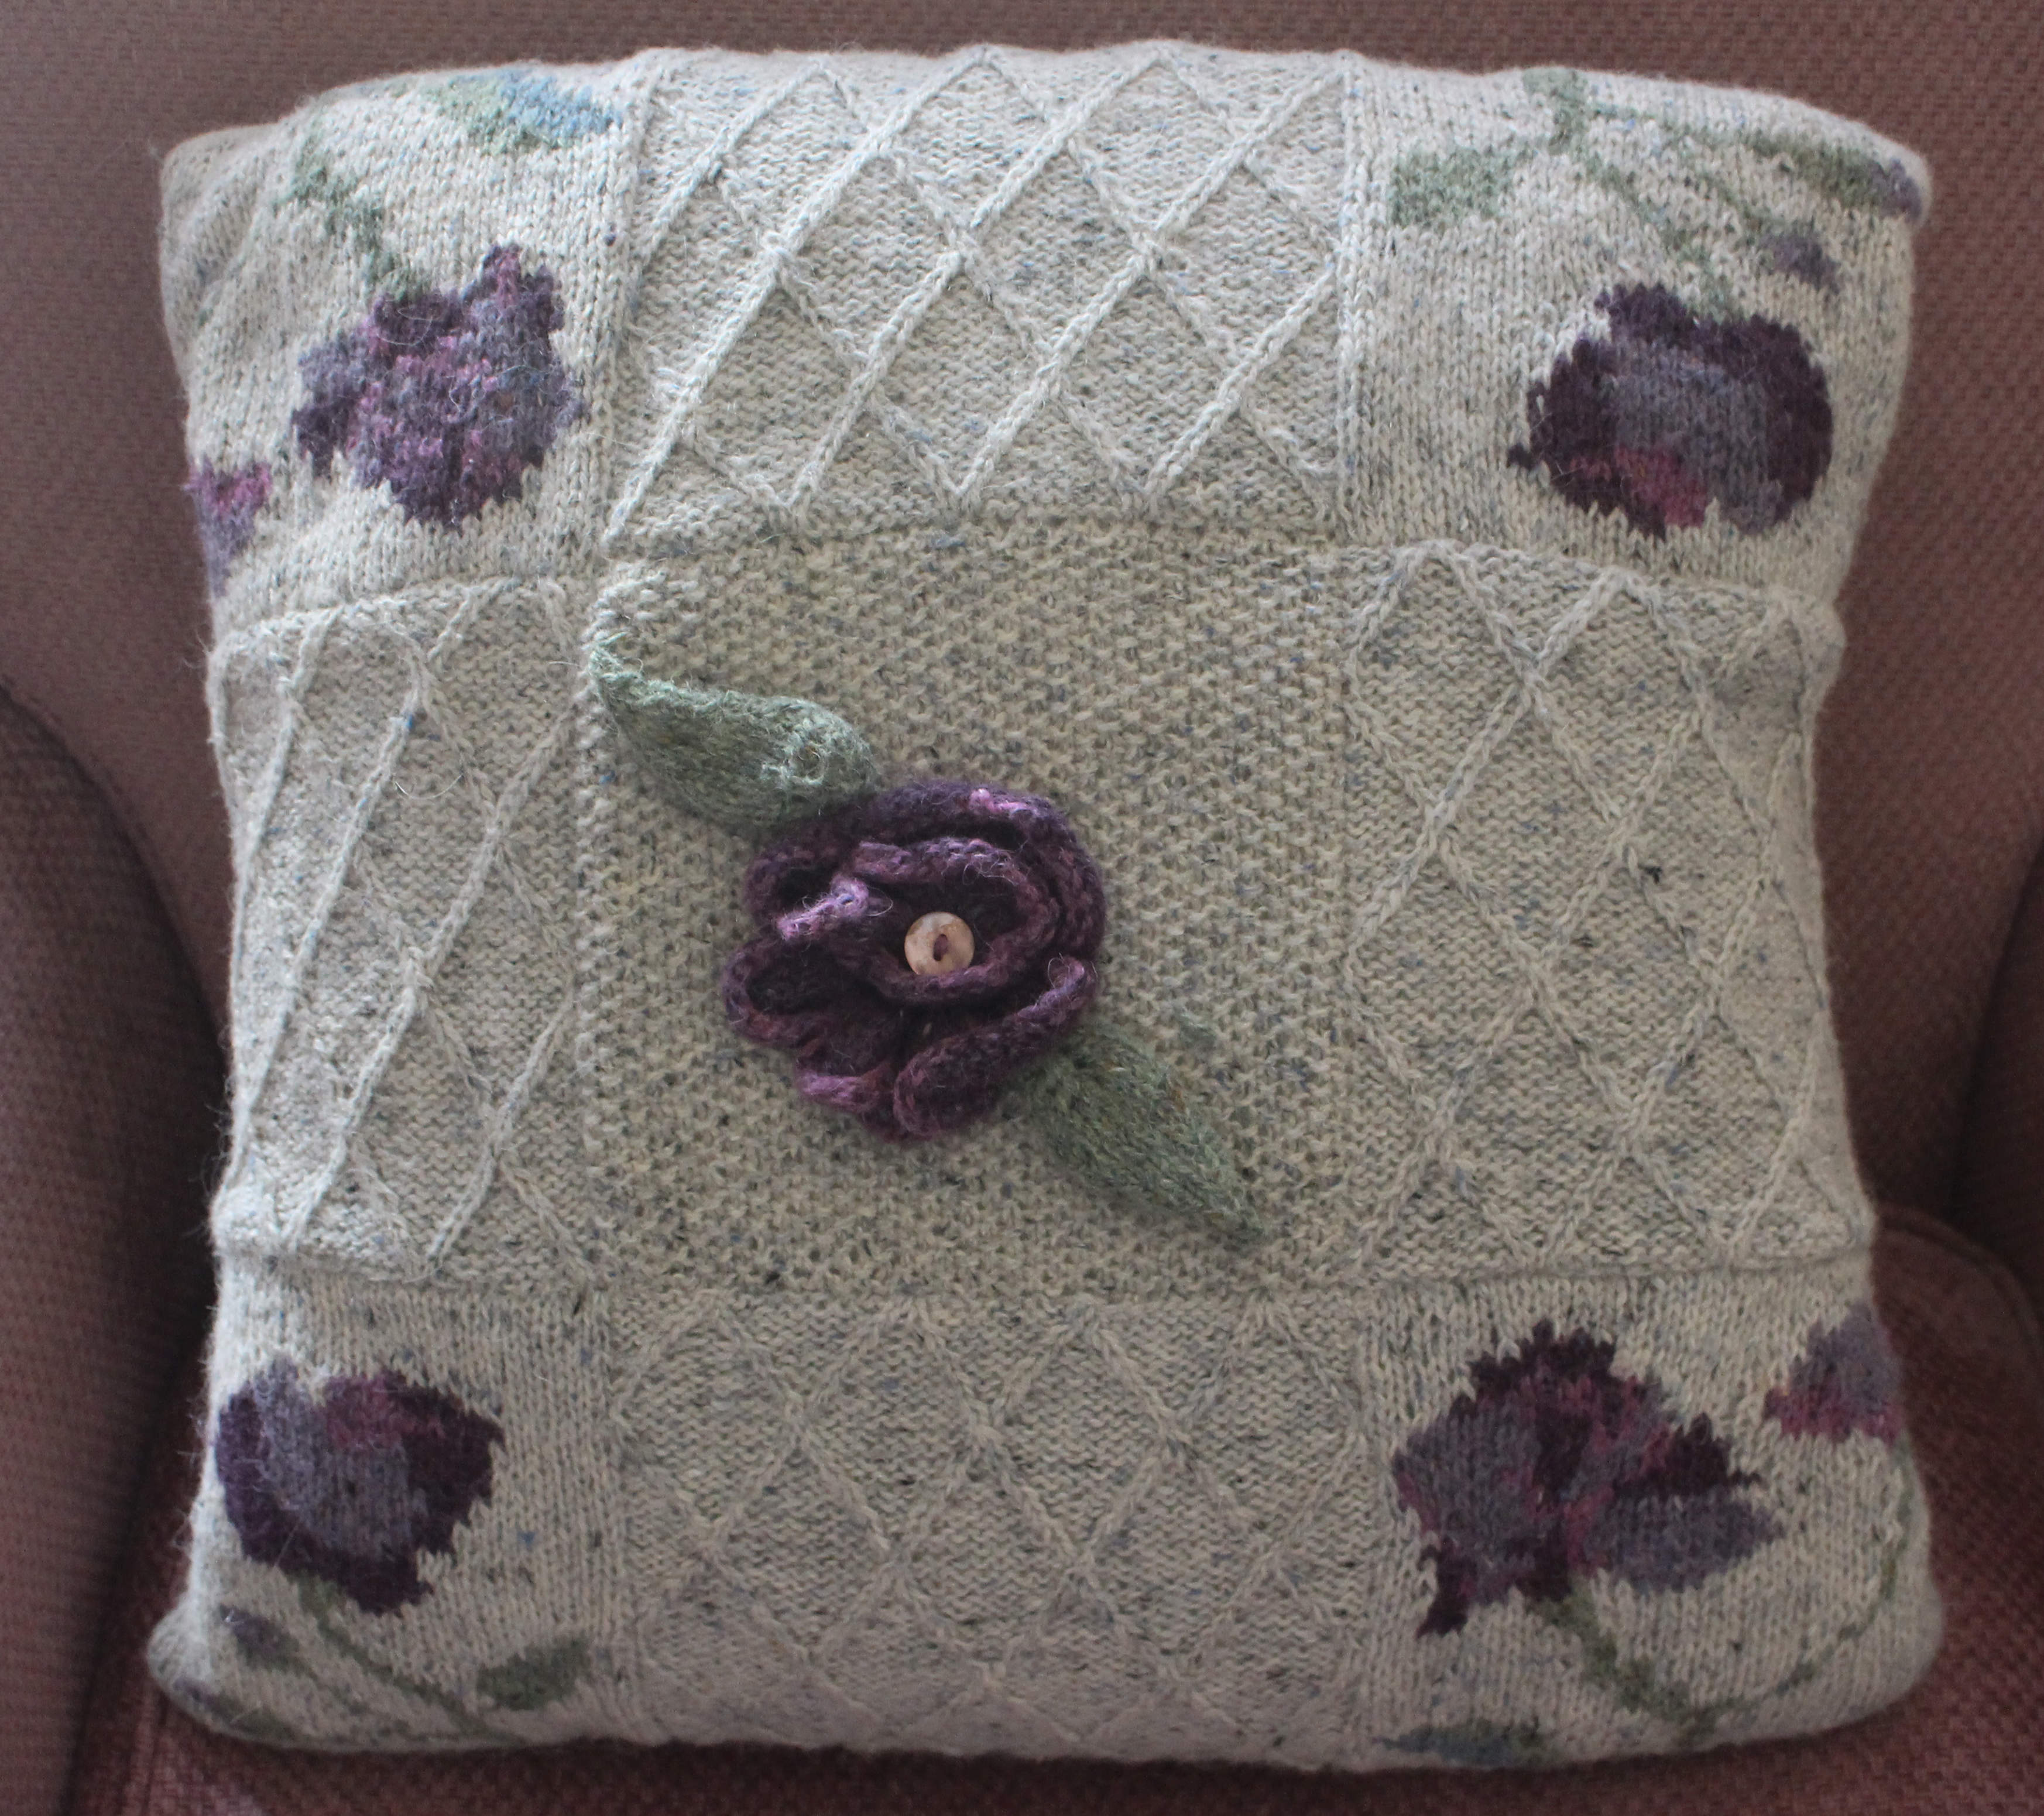 Knitting pattern - rose trellis cushion cover